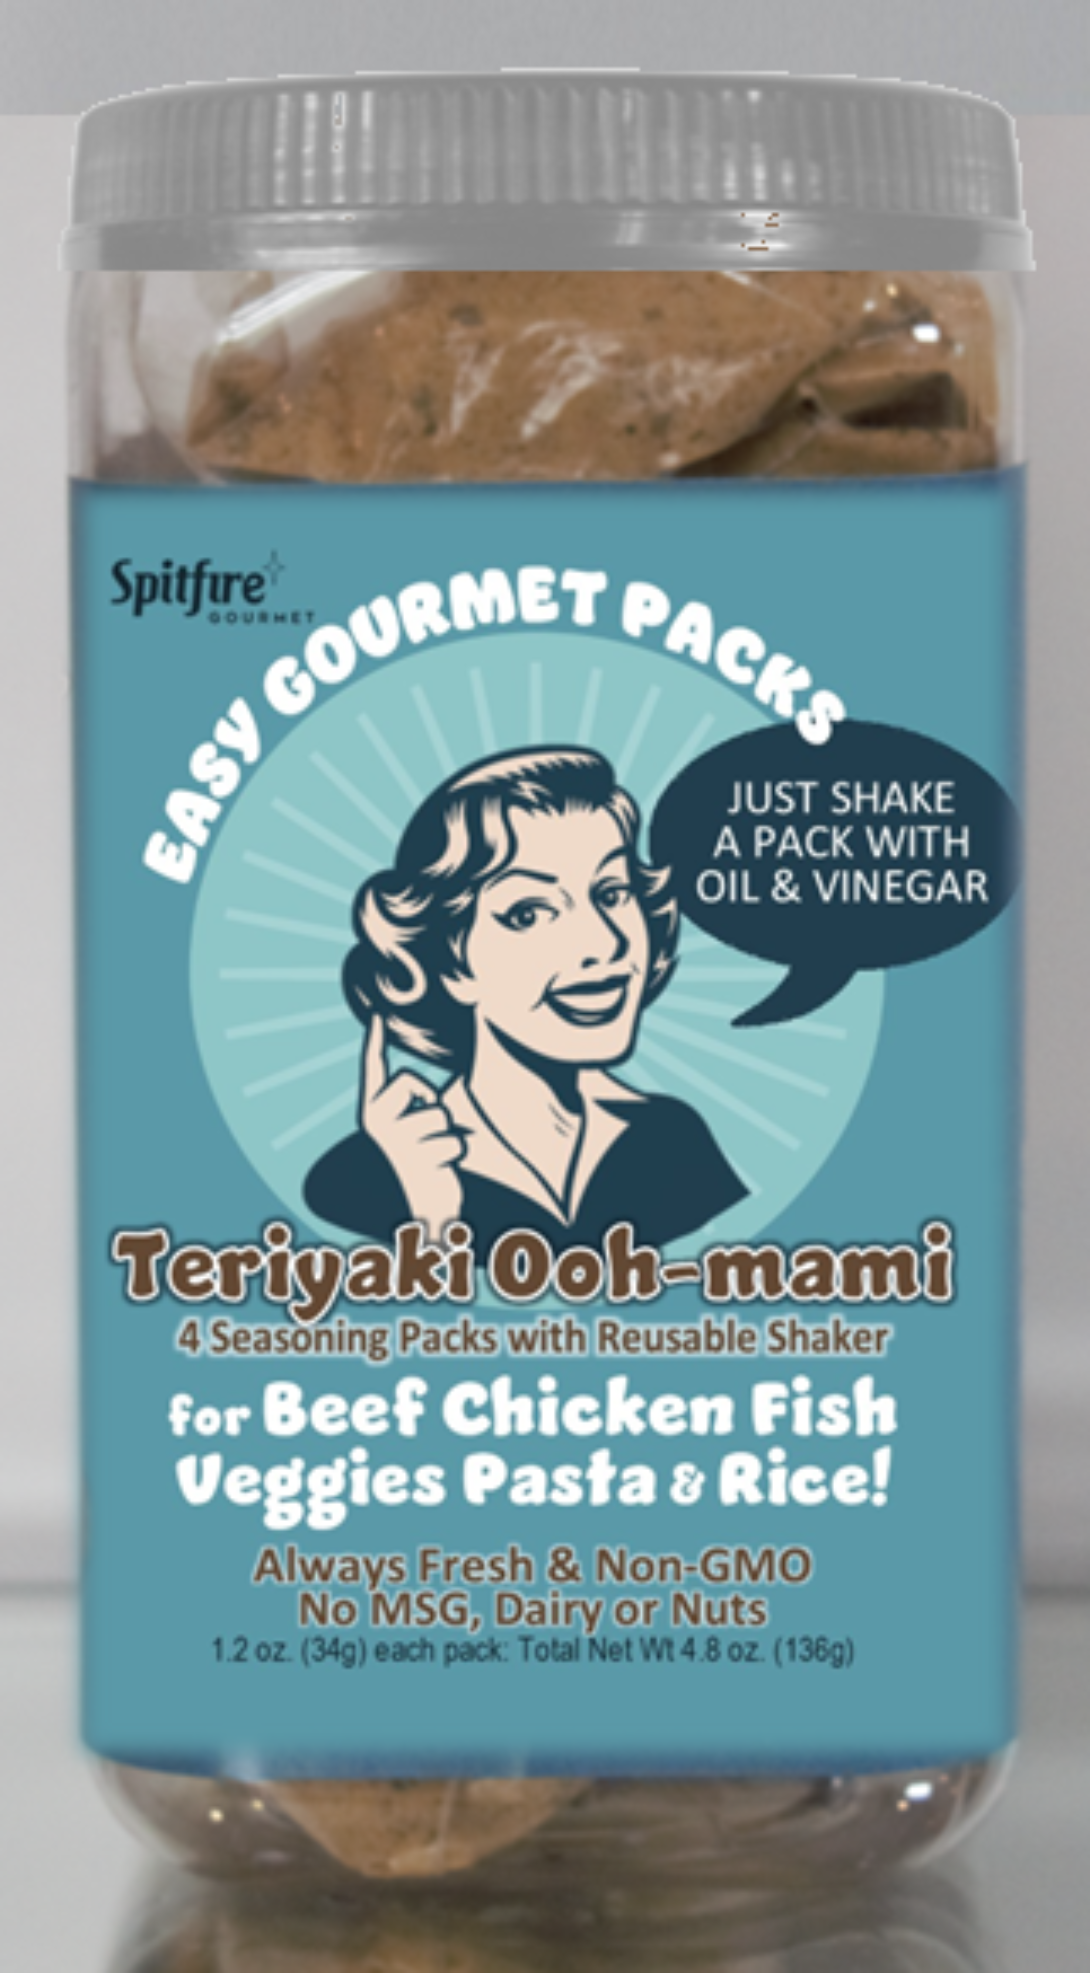 TERIYAKI OOH-MAMI Seasoning Packs